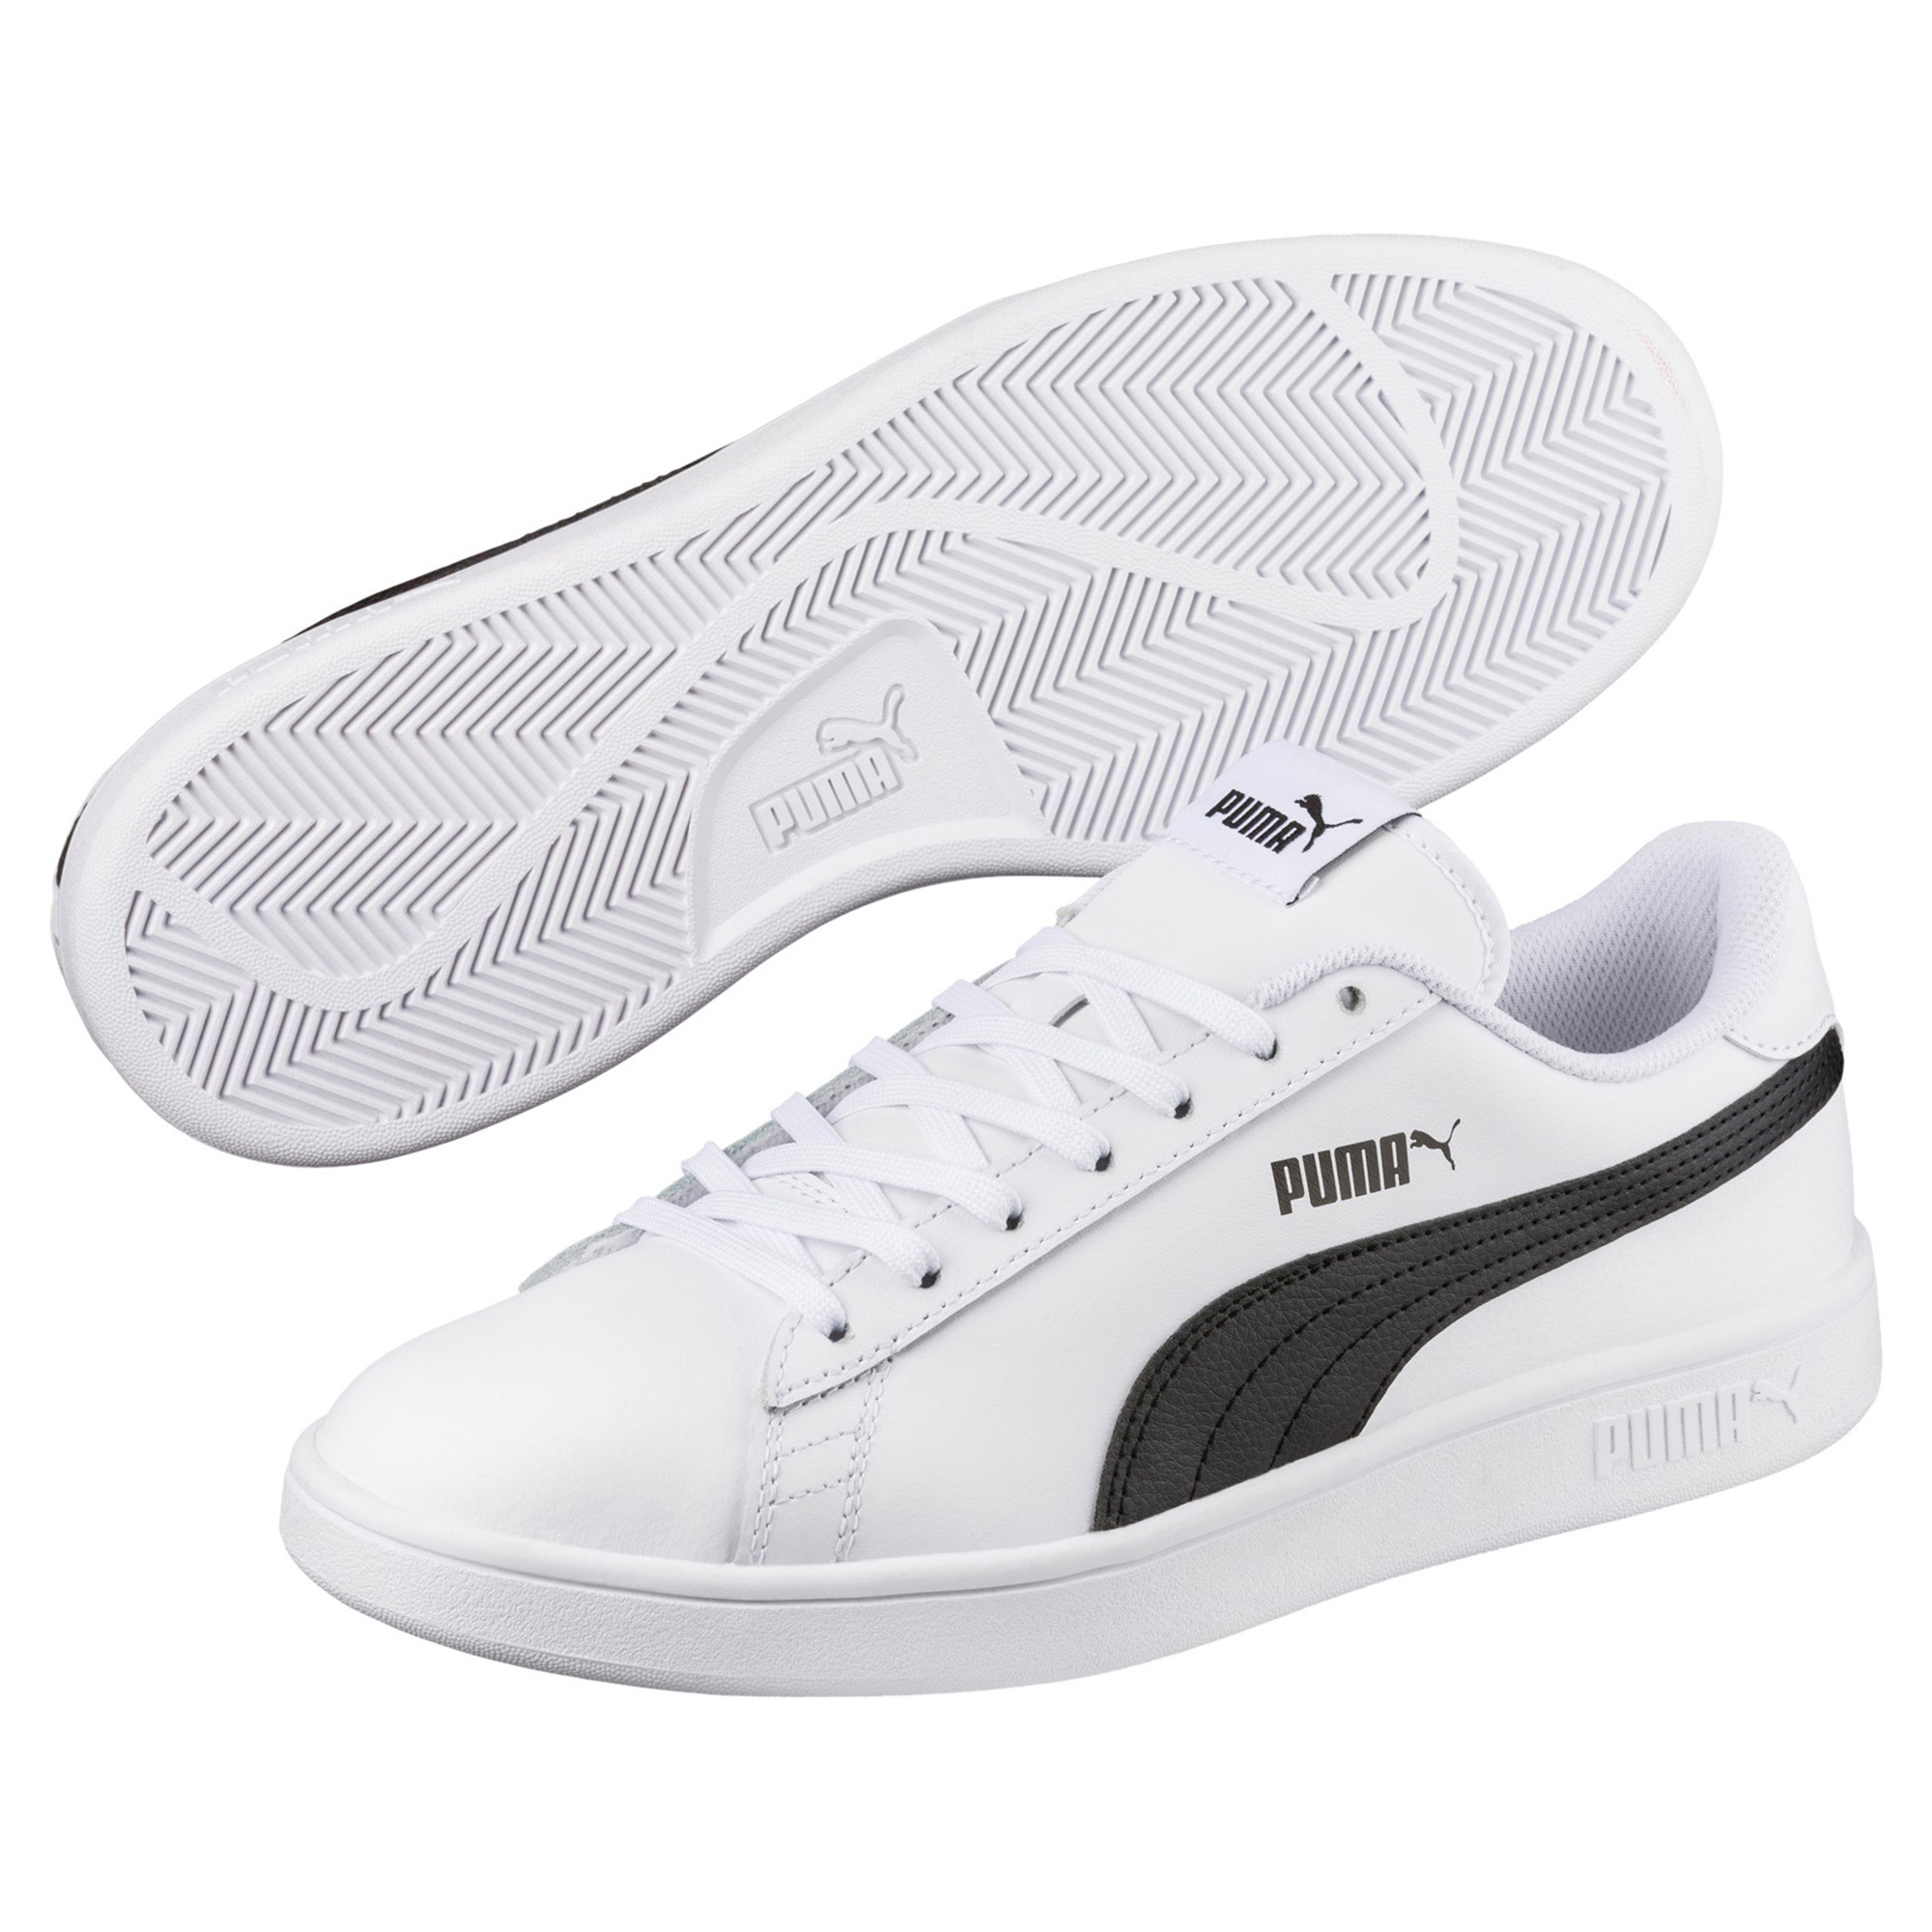 Puma Smash v2 L, Unisex-Erwachsene Sneakers, Weiß (Puma White-Puma Black), 37 EU (4 UK)